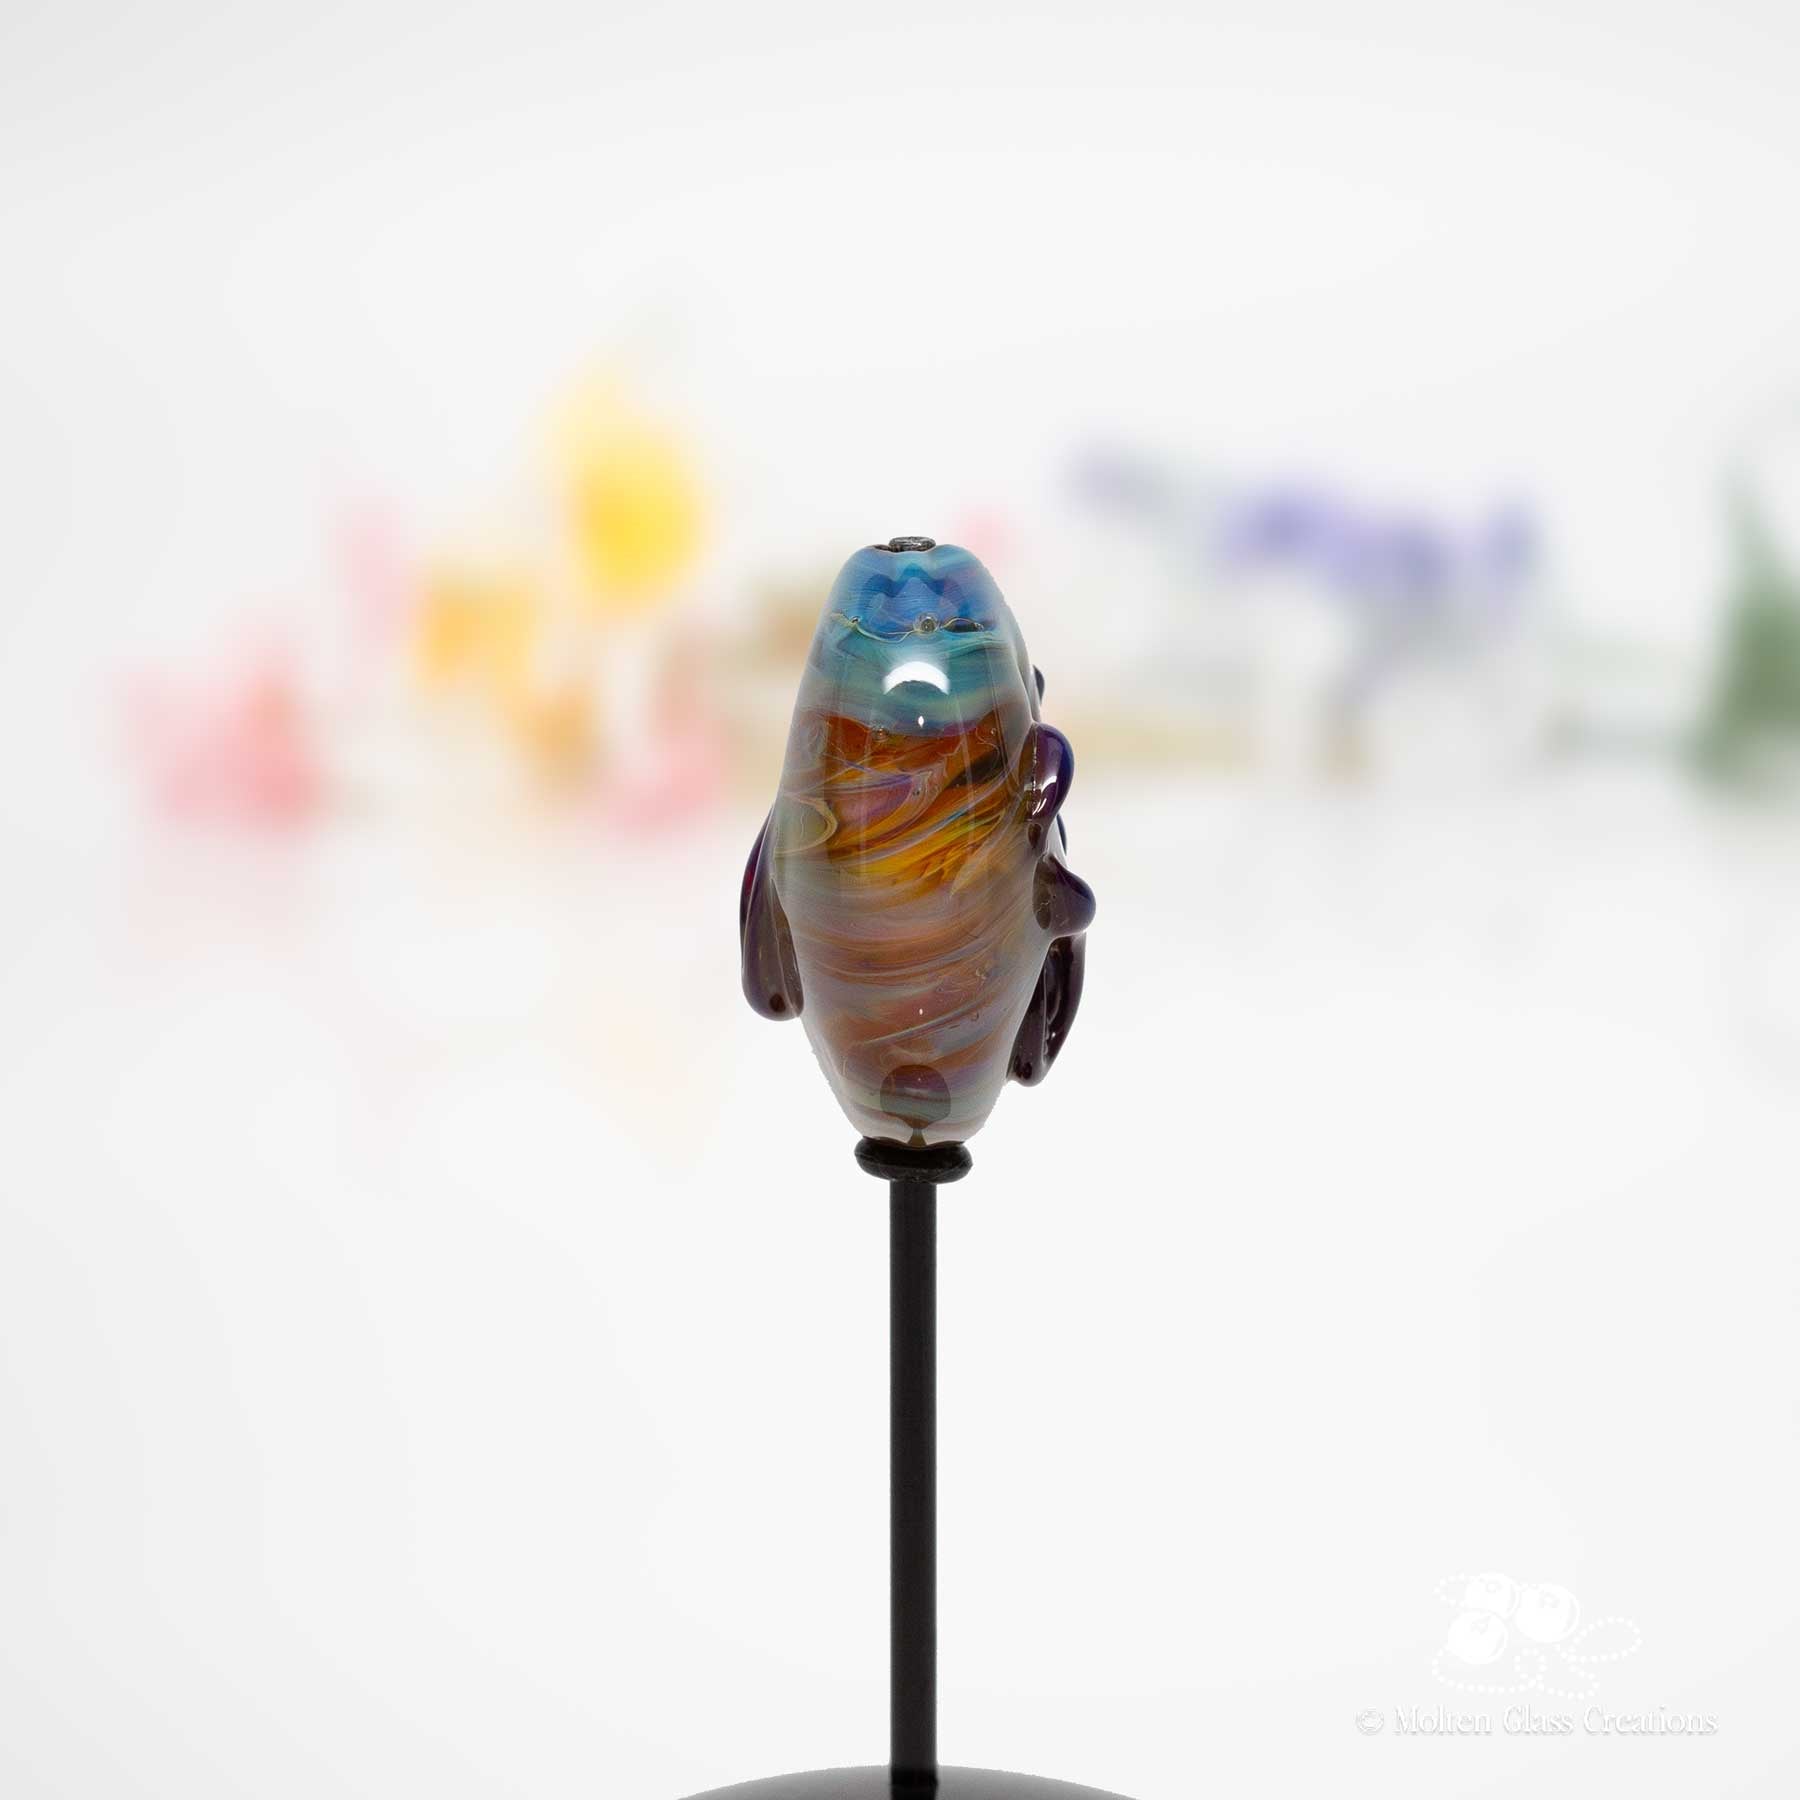 Focal Bead - Multicolor Swirls - Molten Glass Creations